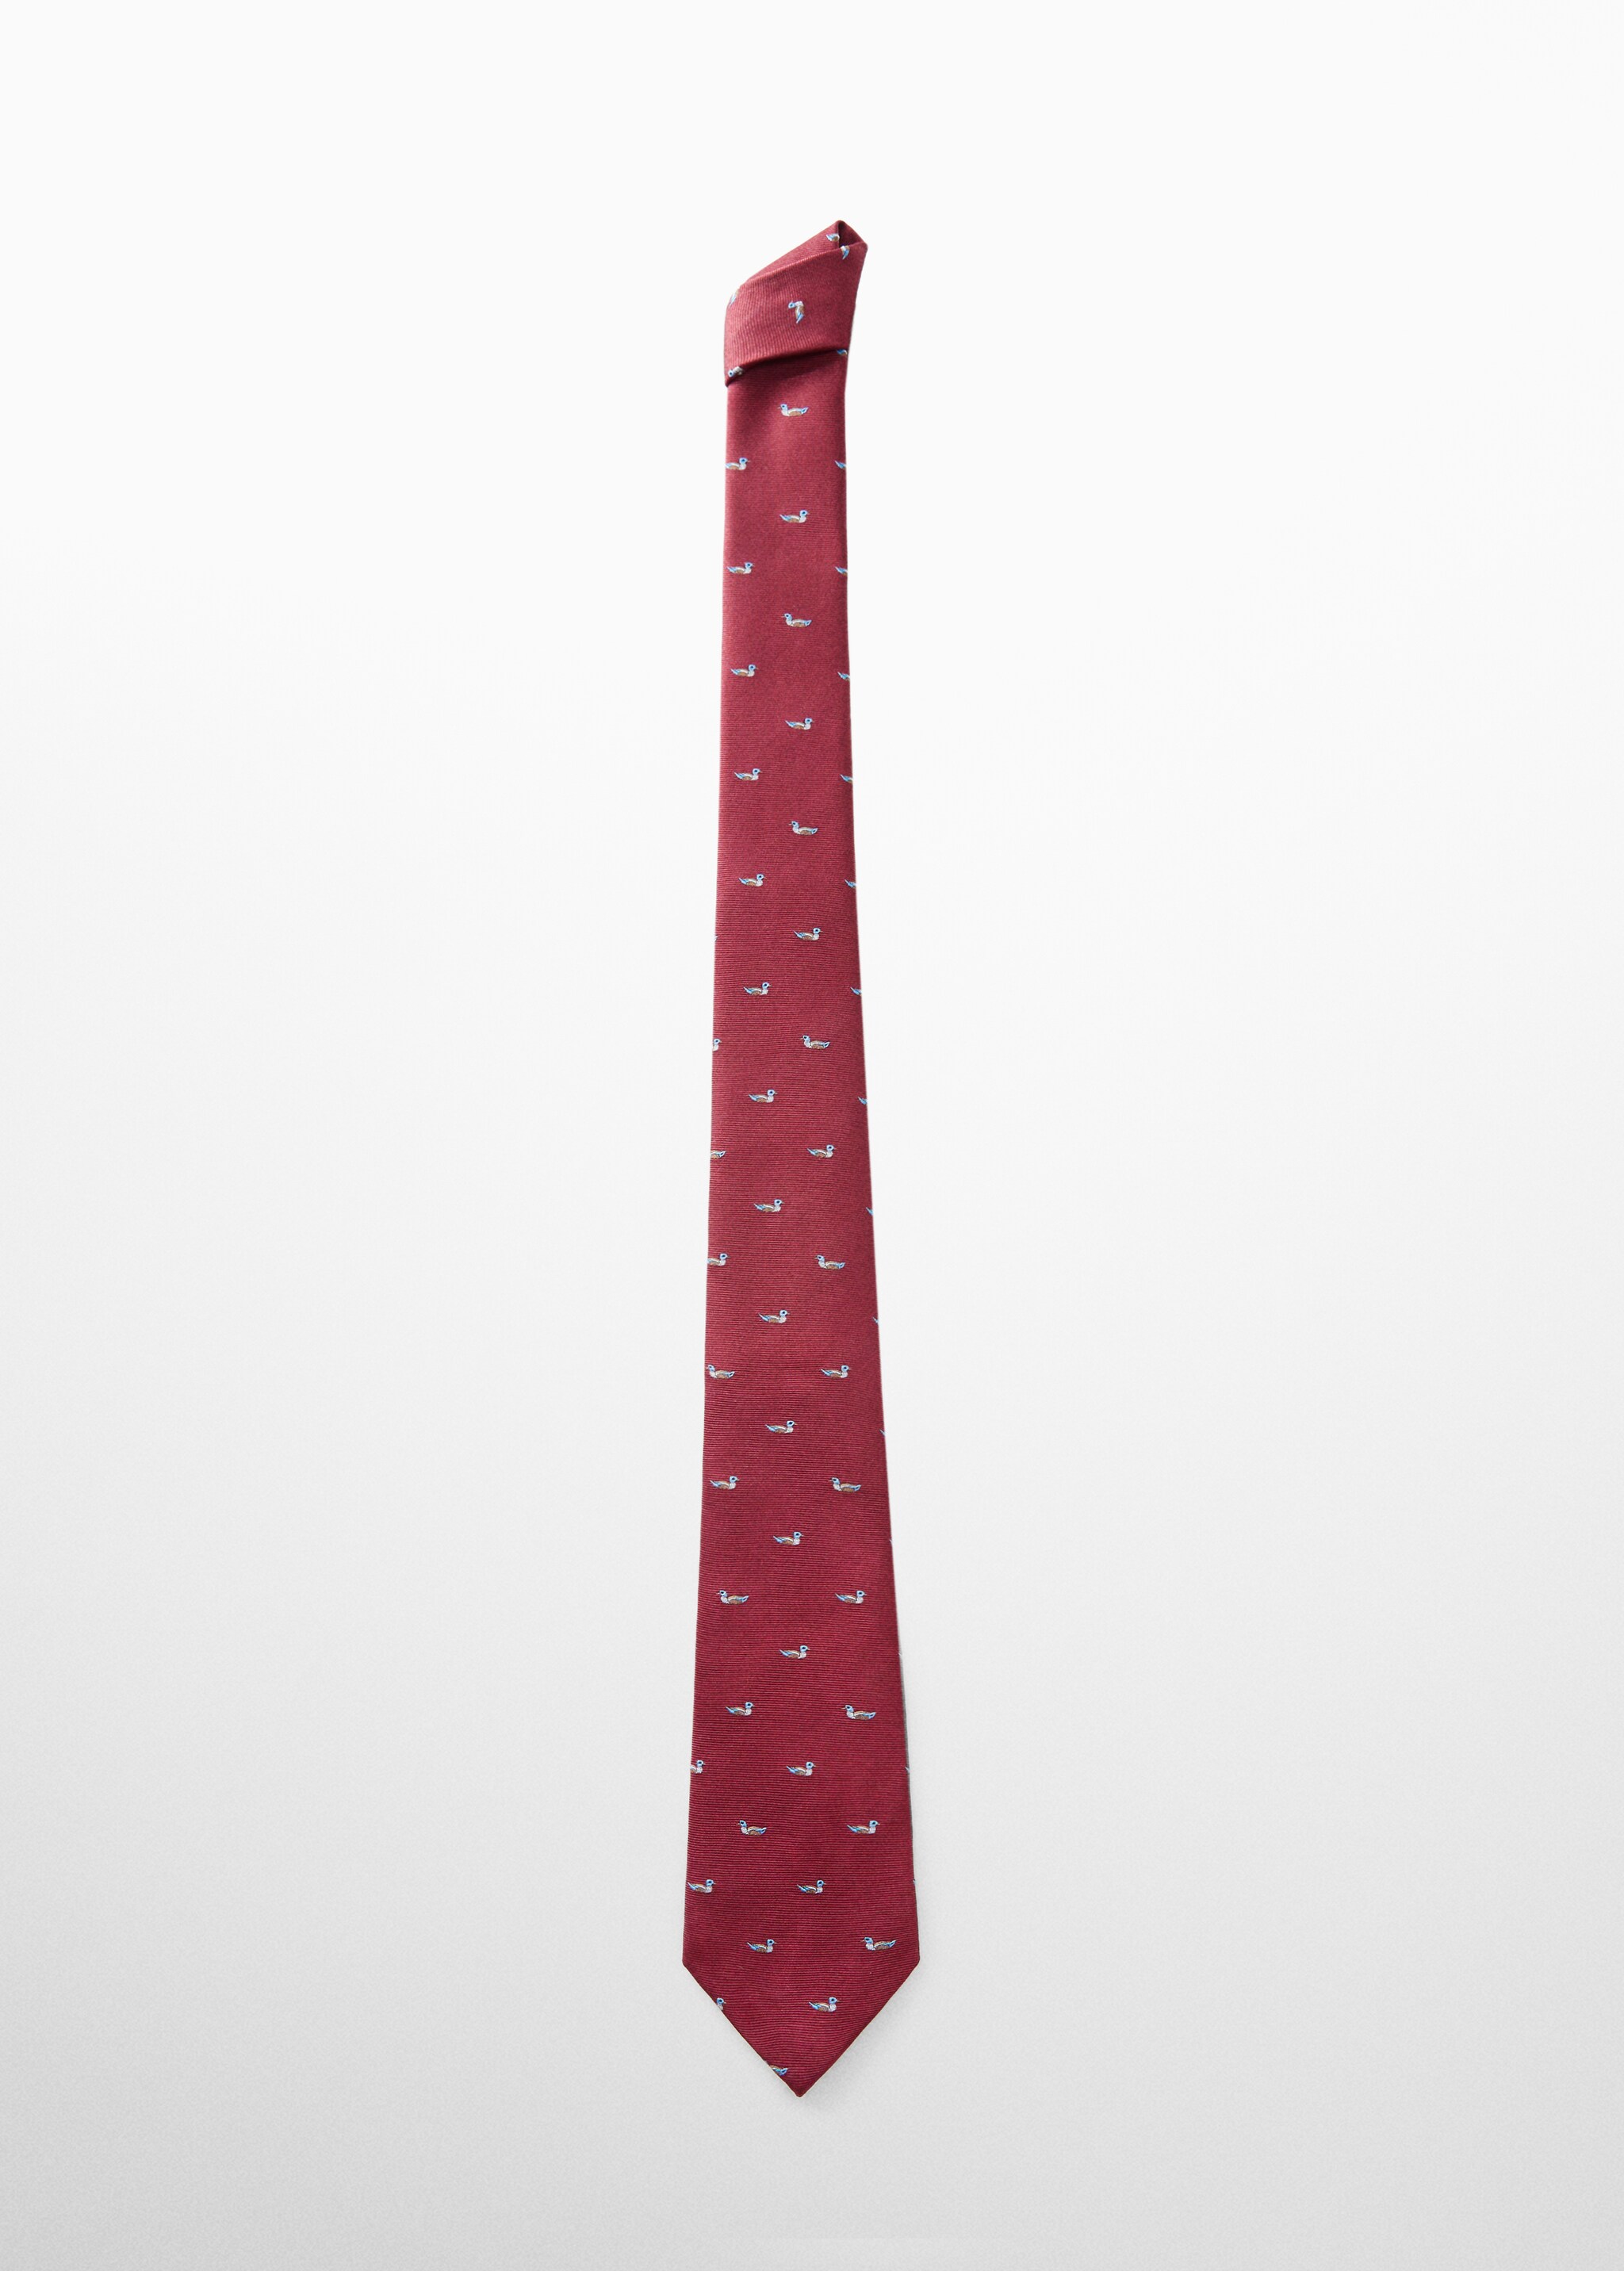 Hayvan desenli kravat - Modelsiz ürün